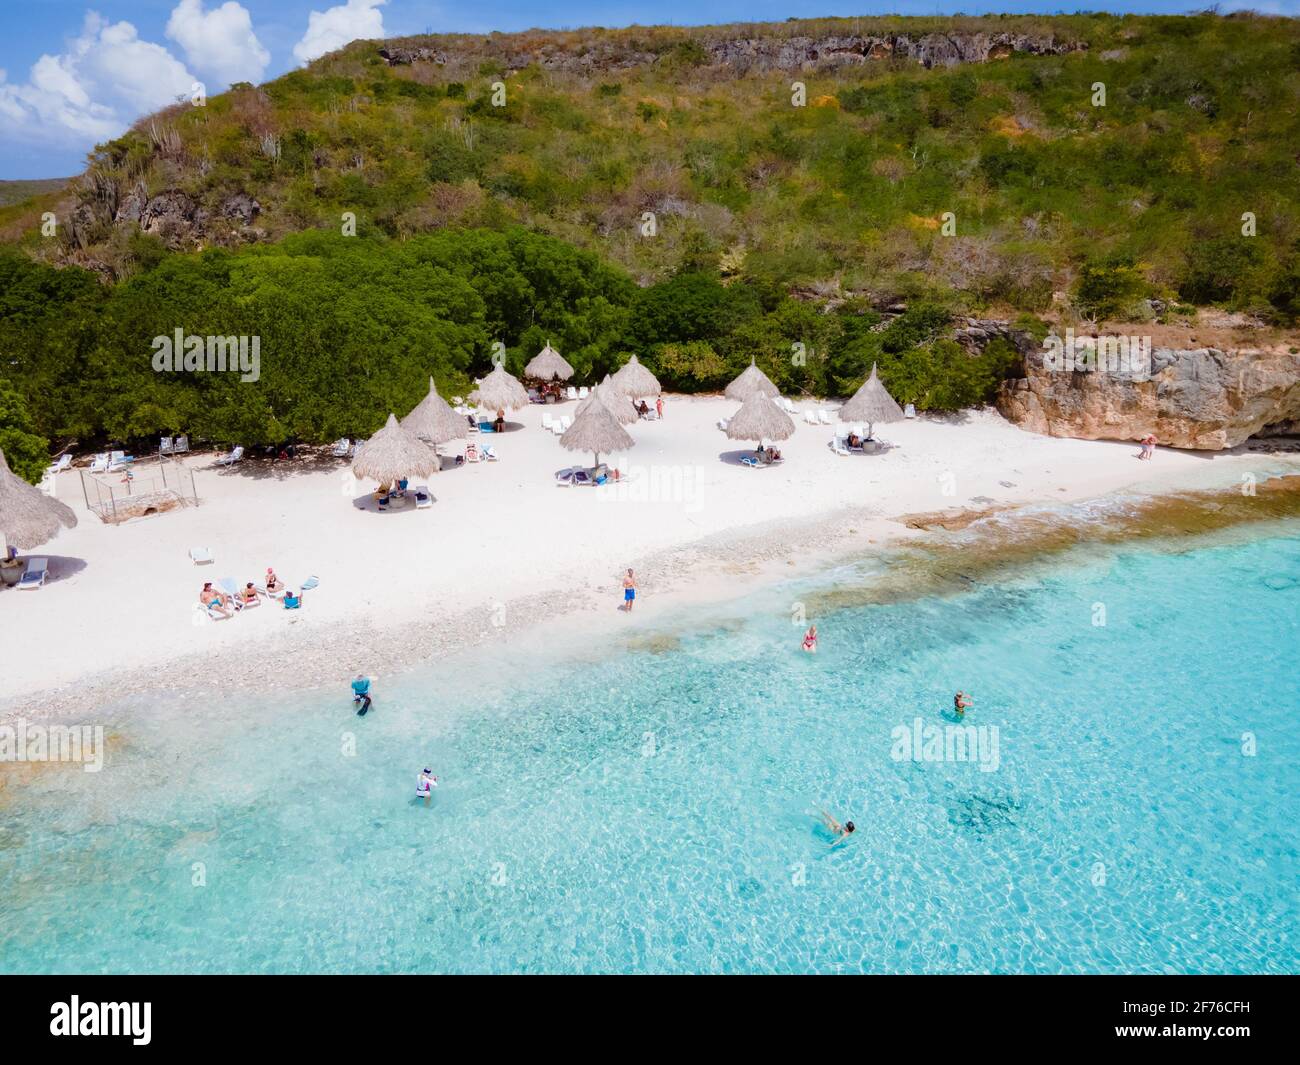 CAS Abou Beach sull'isola caraibica di Curacao, Playa CAS Abou in Curacao Caraibi tropicale spiaggia bianca con oceano blu Foto Stock